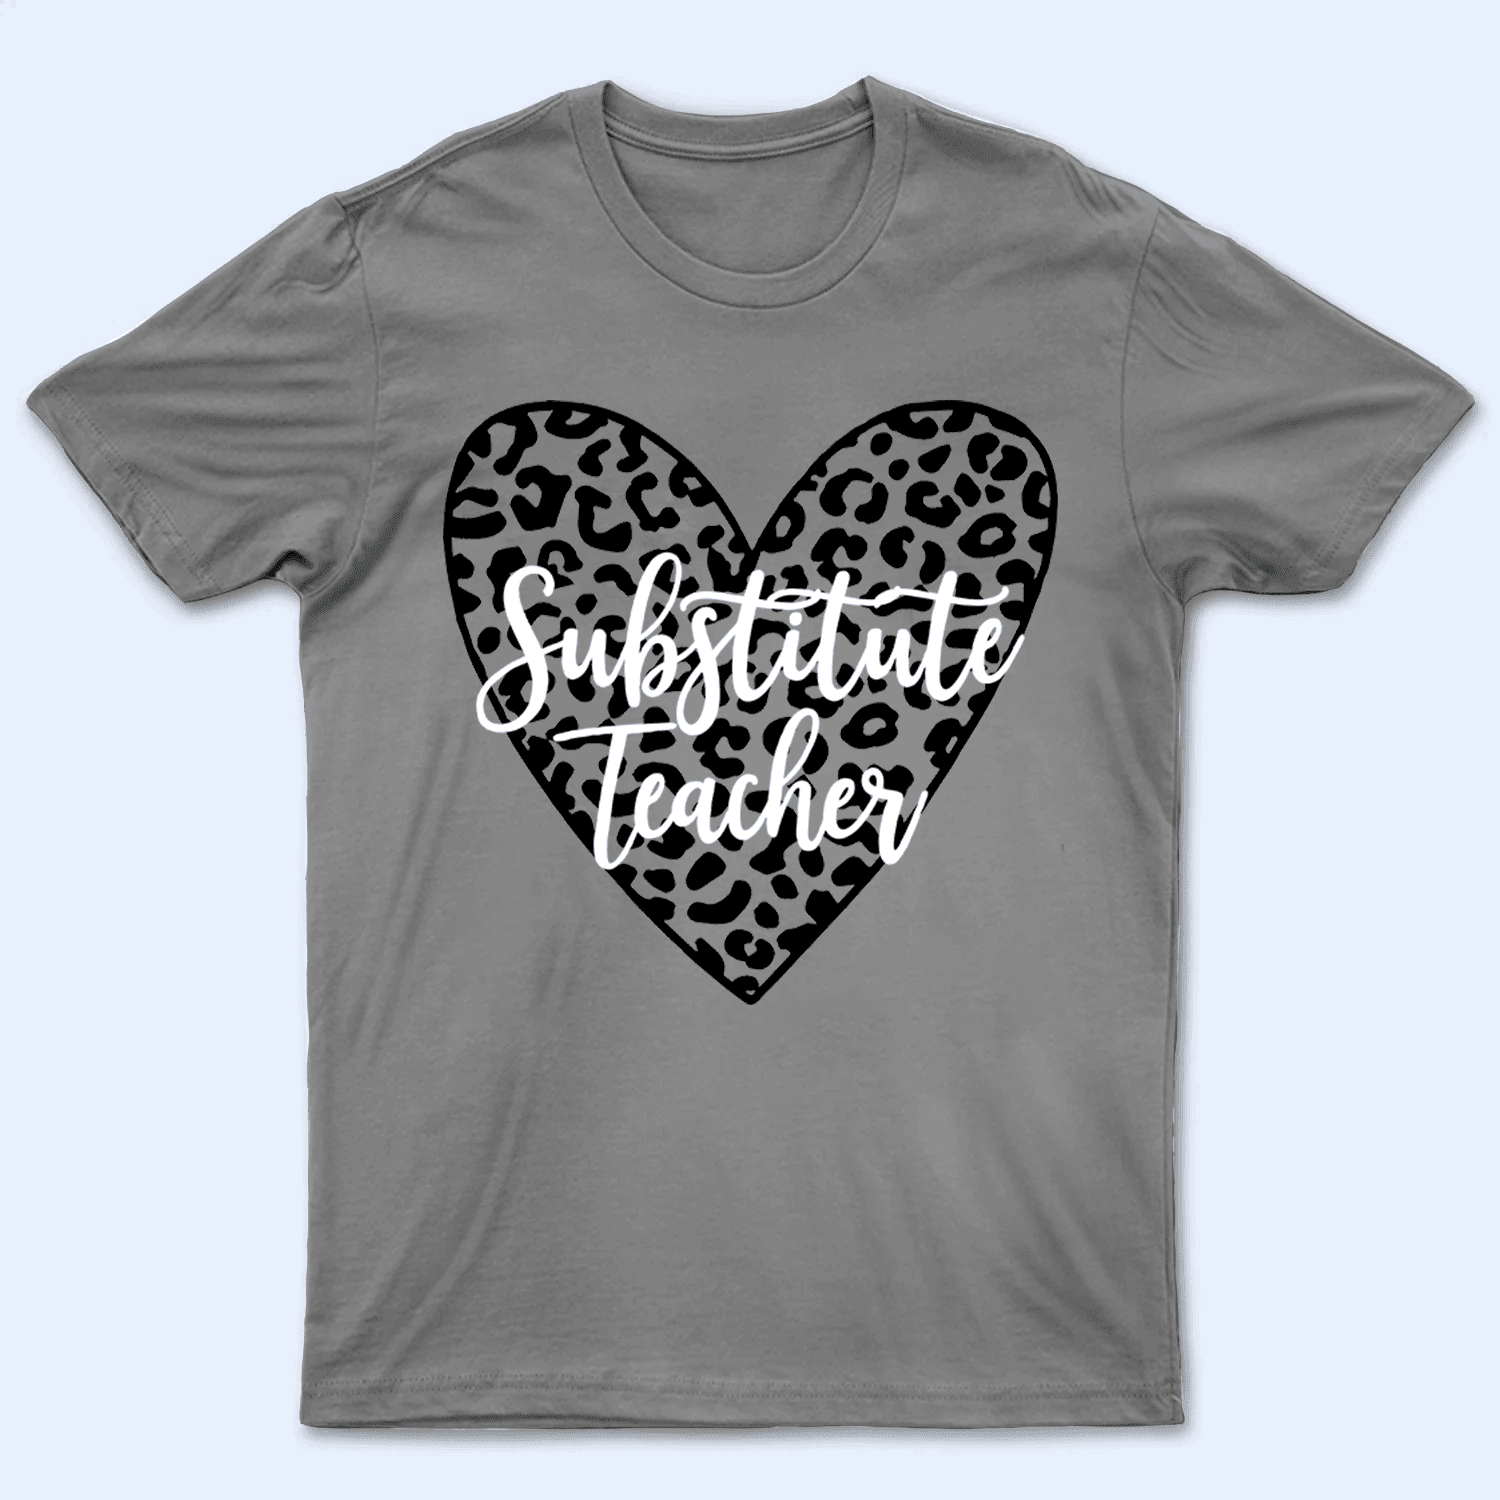 Leopard Heart School Mascot - Personalized Custom T Shirt - Birthday, Loving, Funny Gift for Teacher, Kindergarten, Preschool, Pre K, Paraprofessional - Suzitee Store